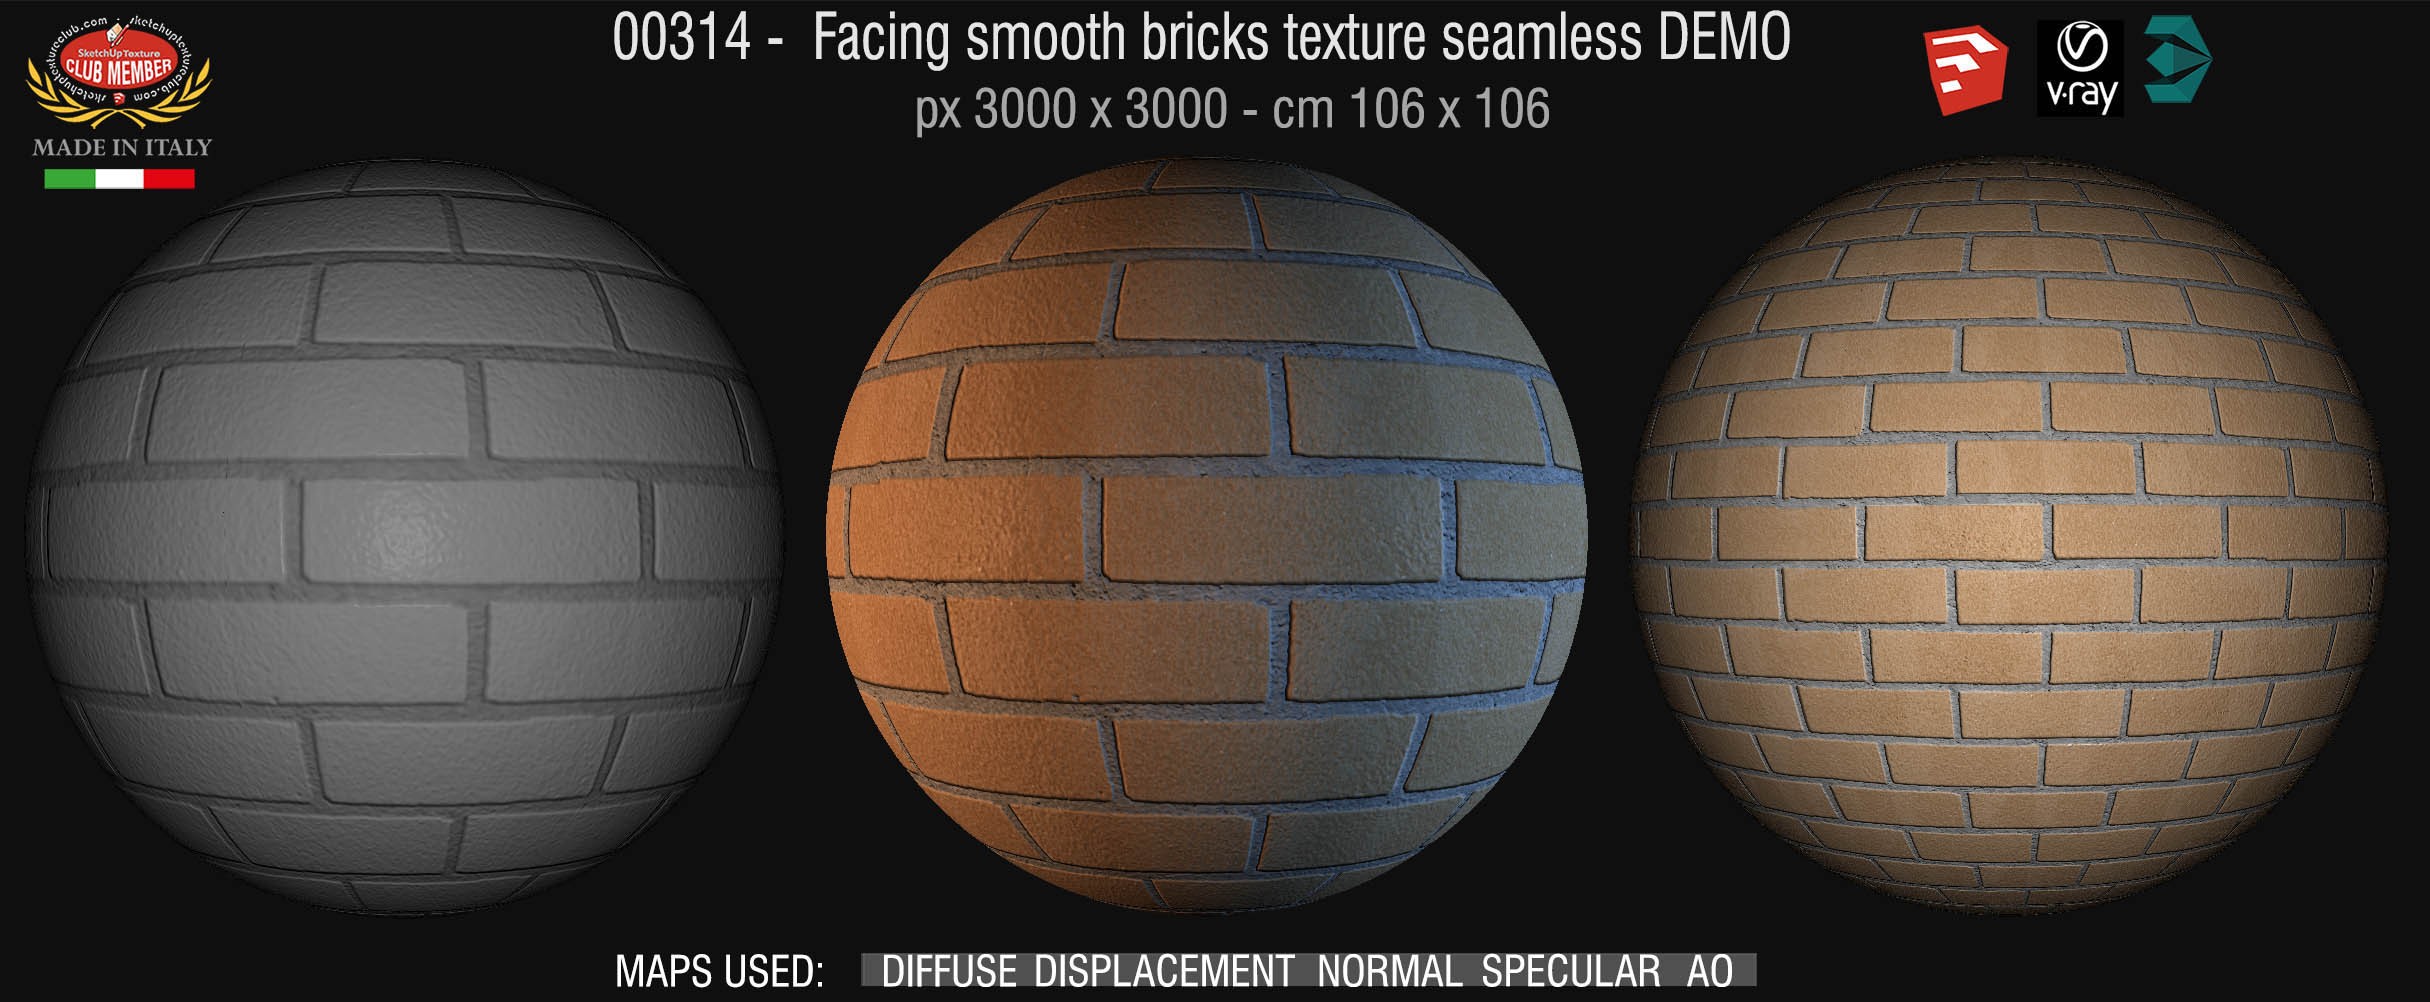 00314 Facing smooth bricks texture seamless + maps DEMO